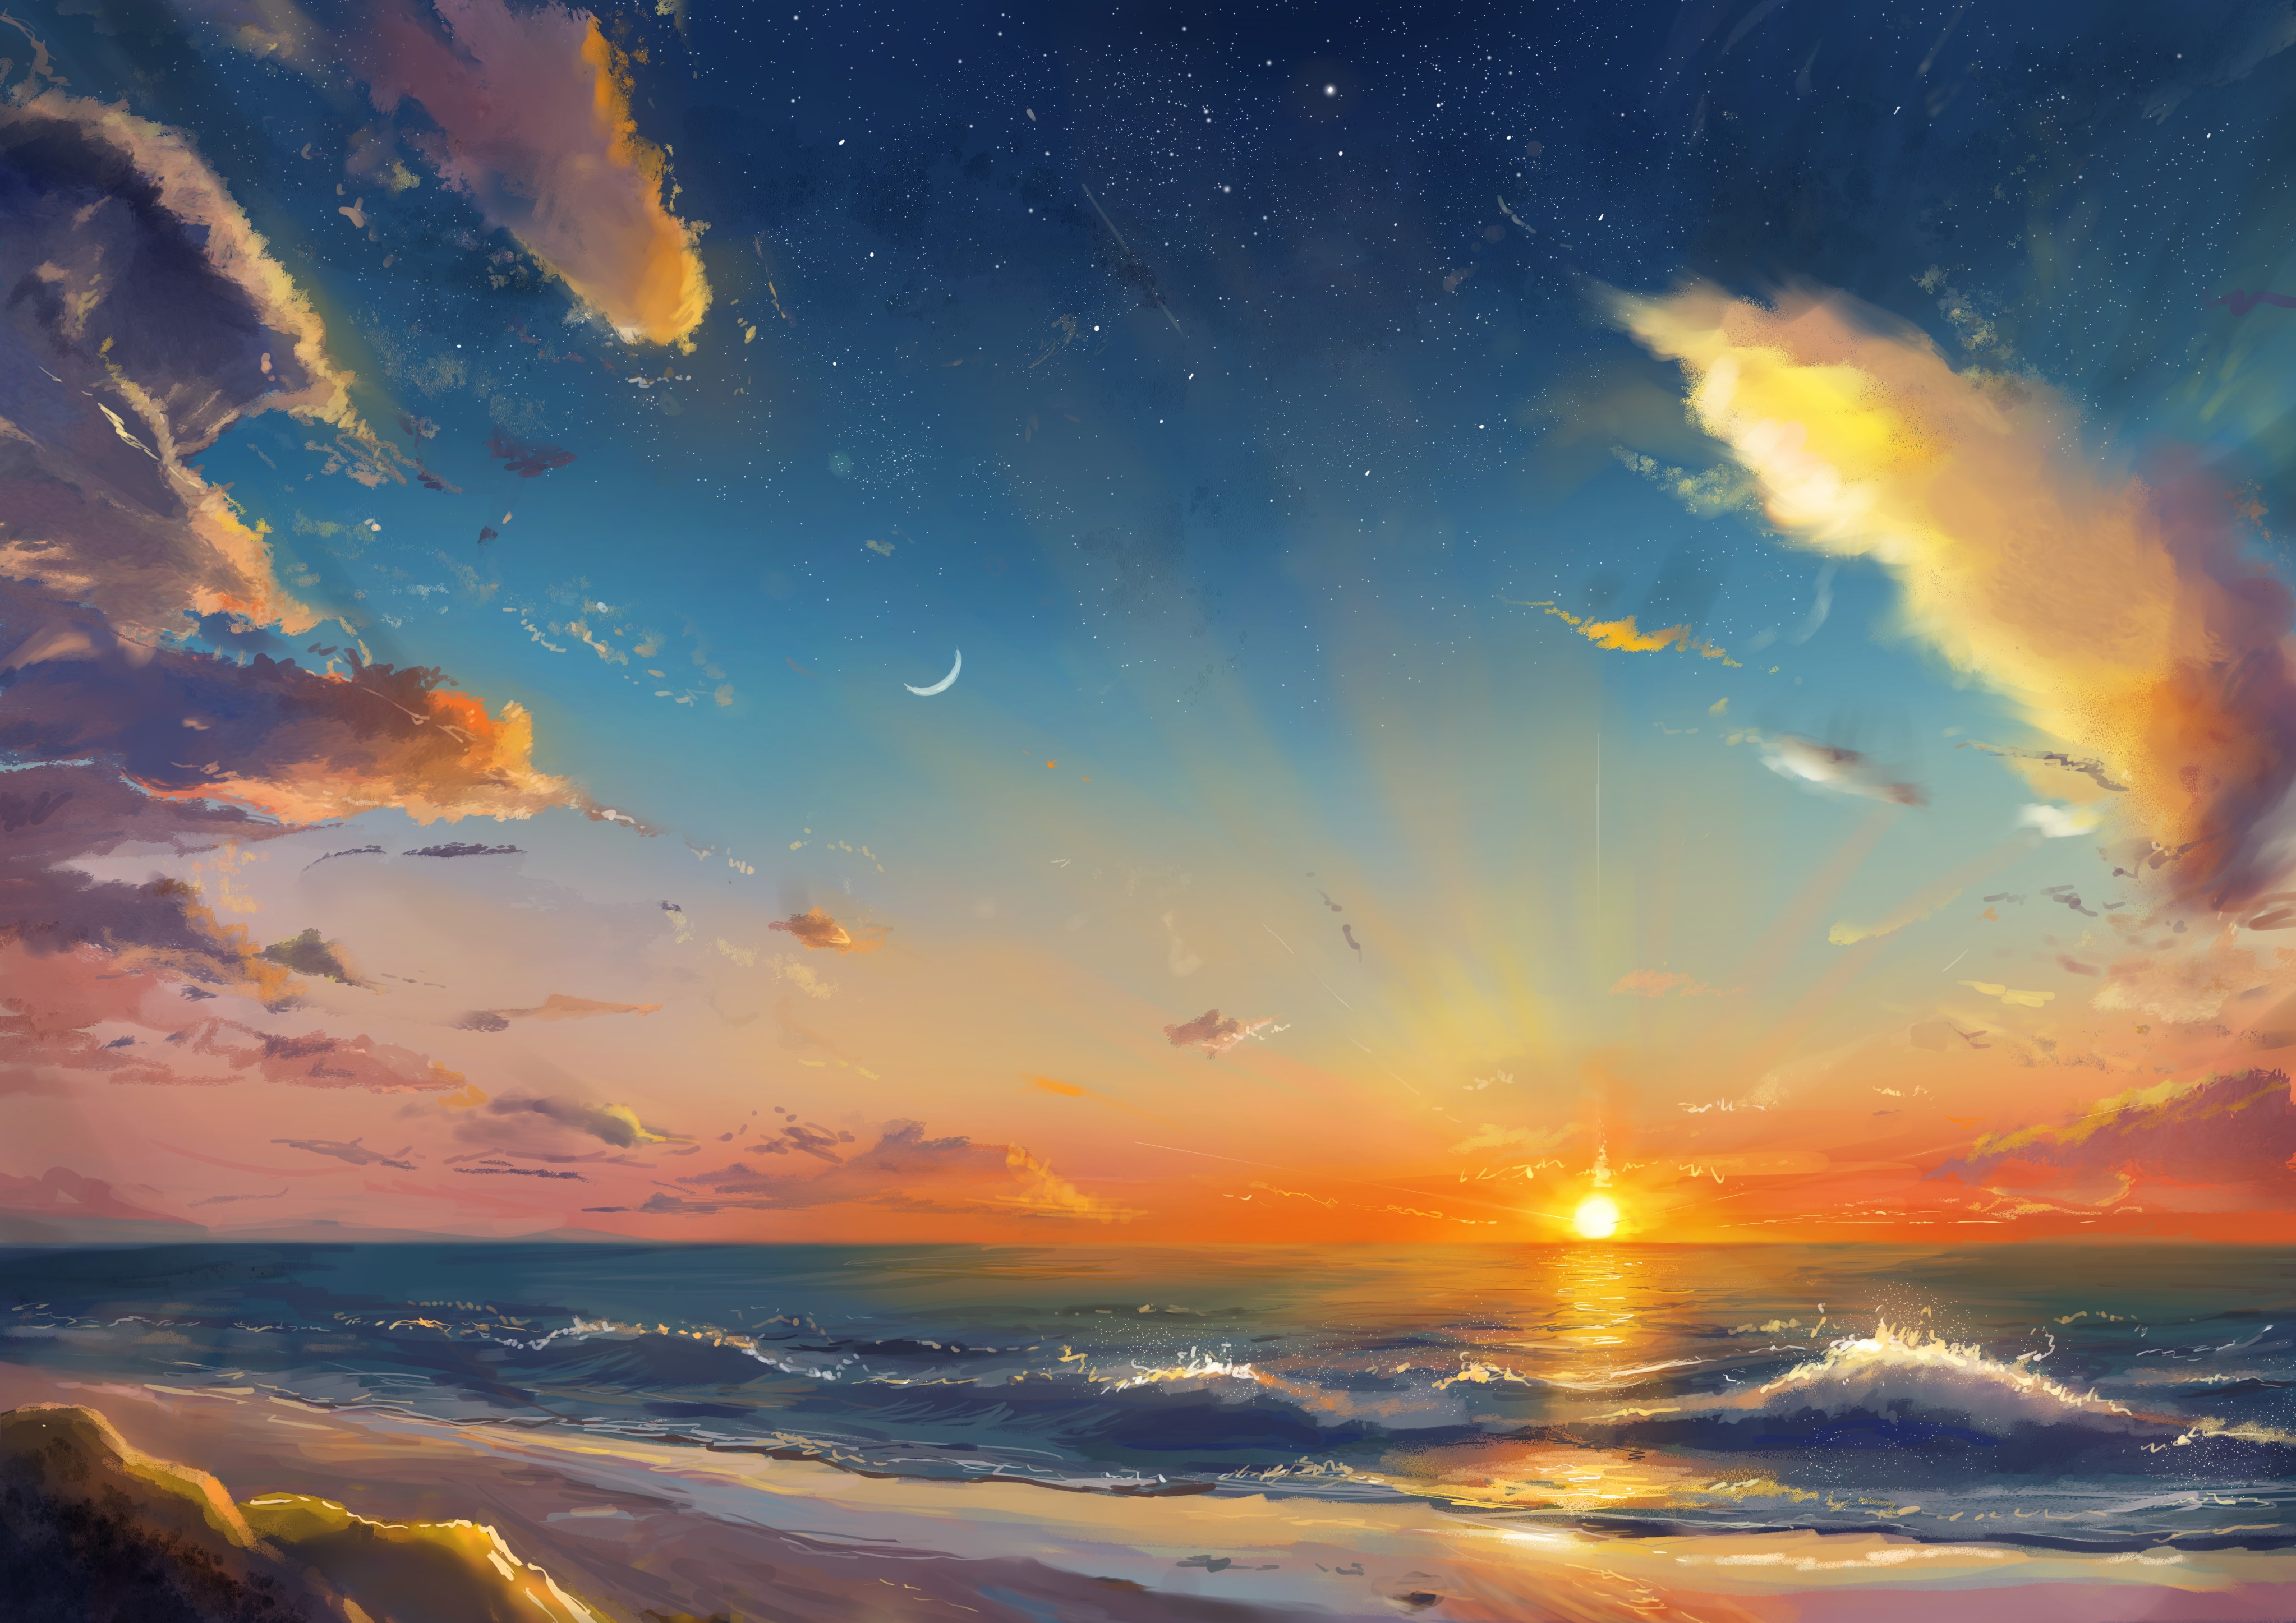 Digital Art Artwork Illustration Digital Painting Landscape Beach Sea Water Sunlight Moon Sky Clouds 4093x2894